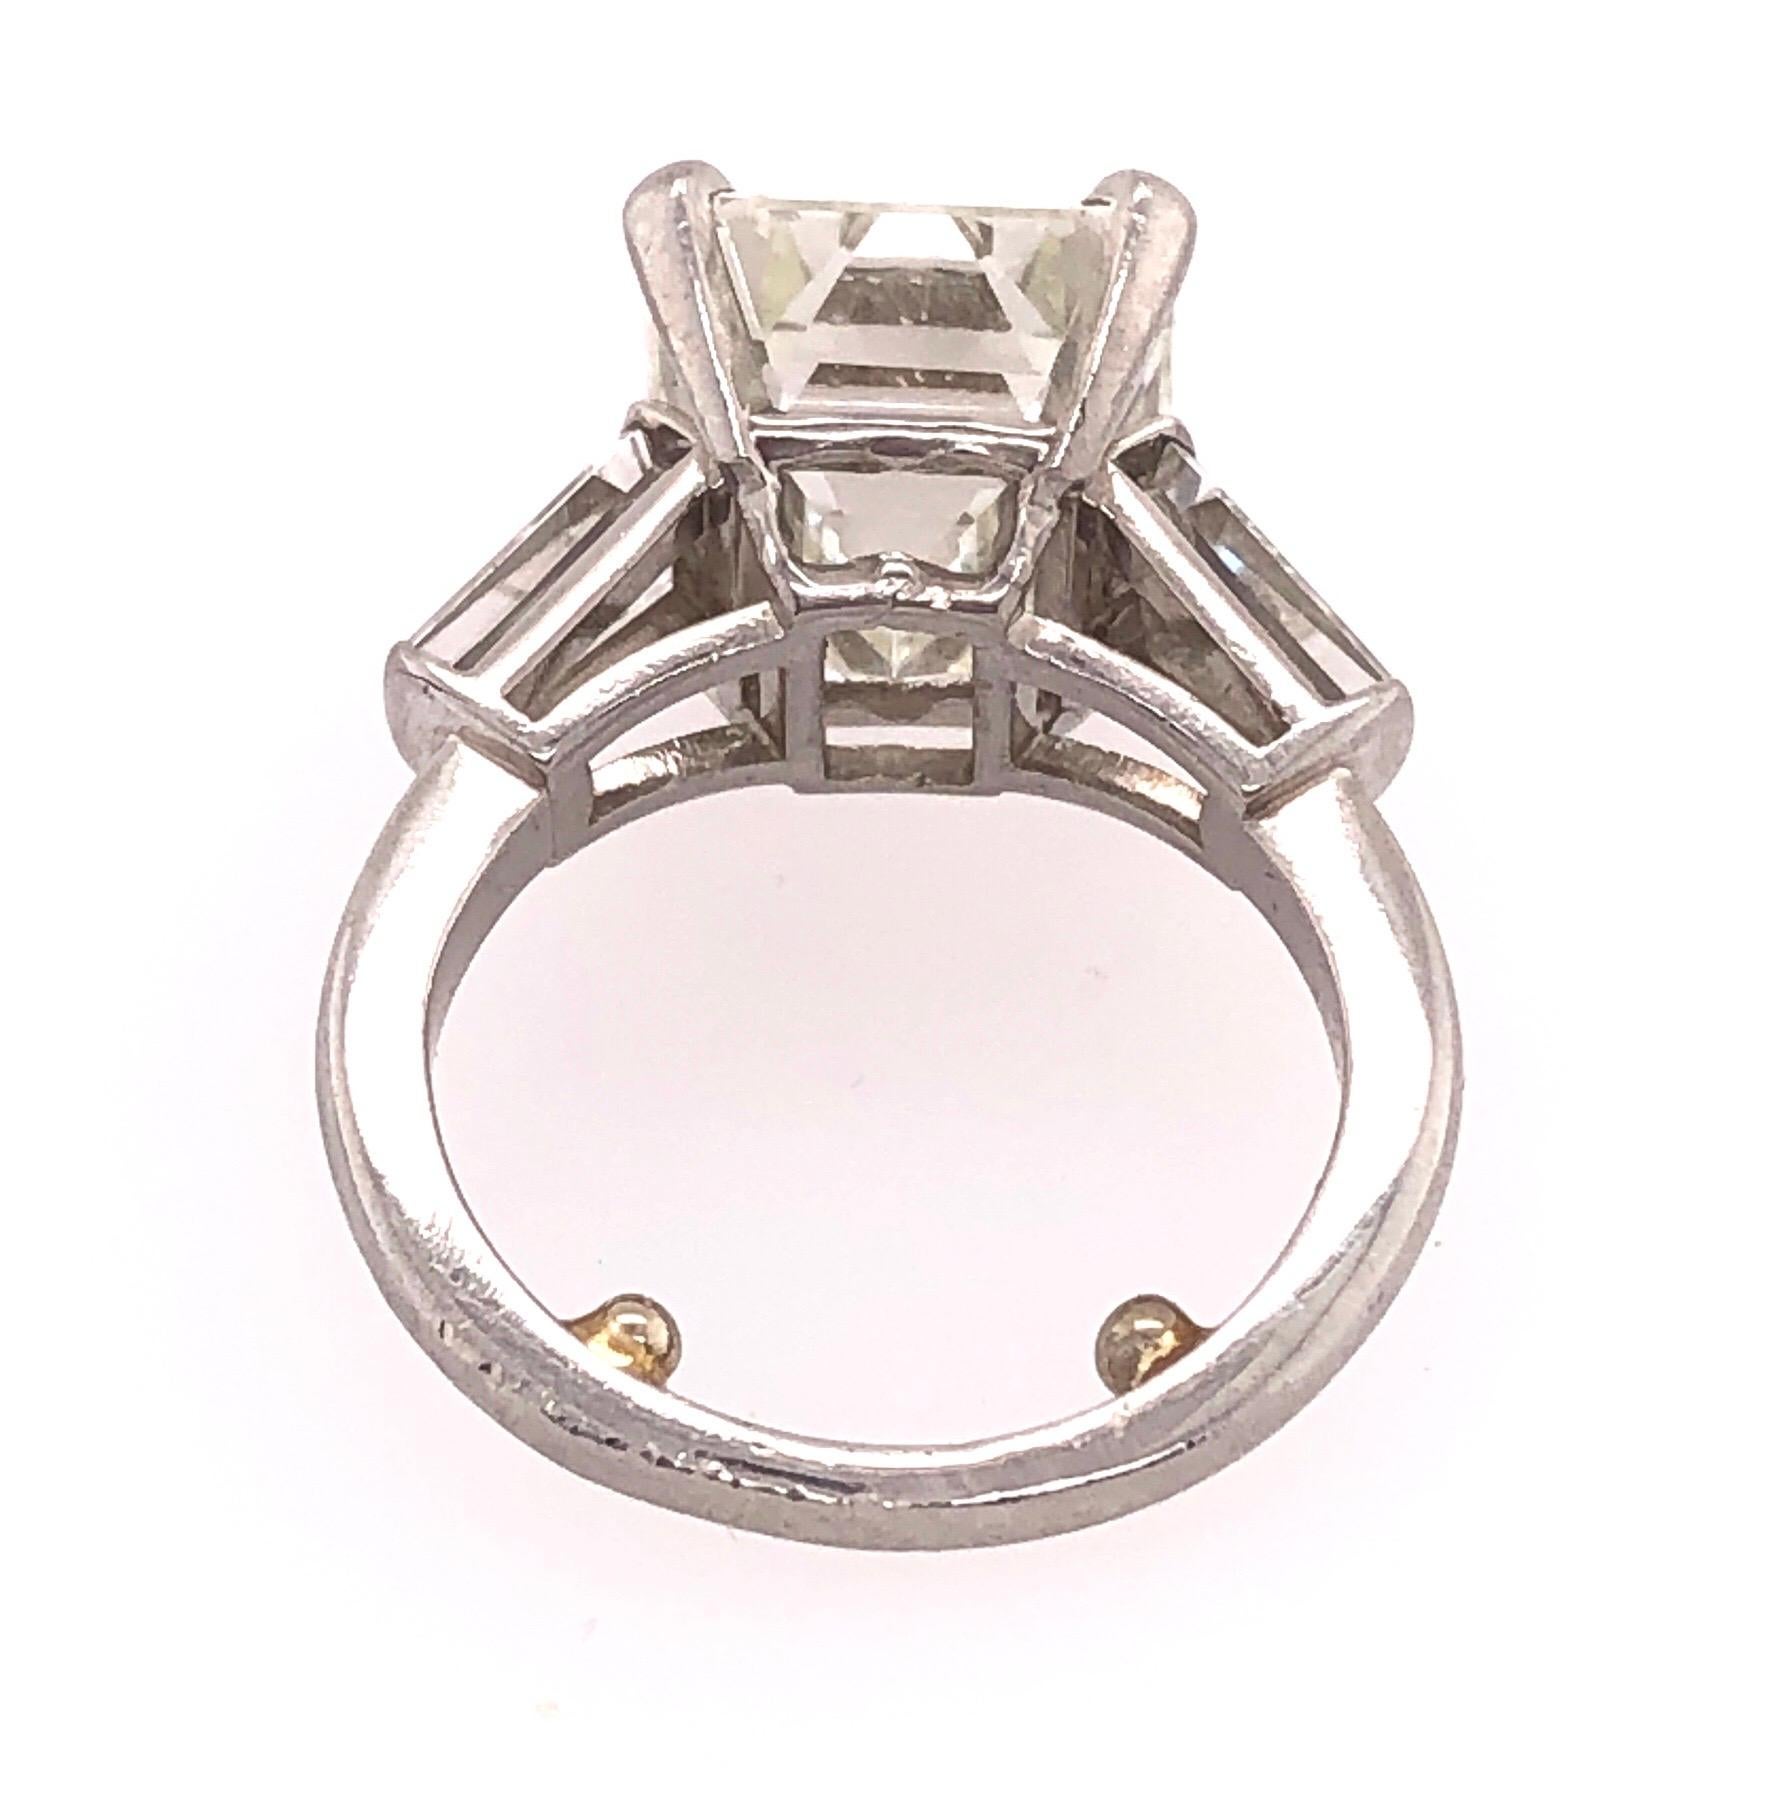 6.43 Carat Emerald Cut Diamond Engagement Ring VS1 J/K Color, Platinum Setting For Sale 3